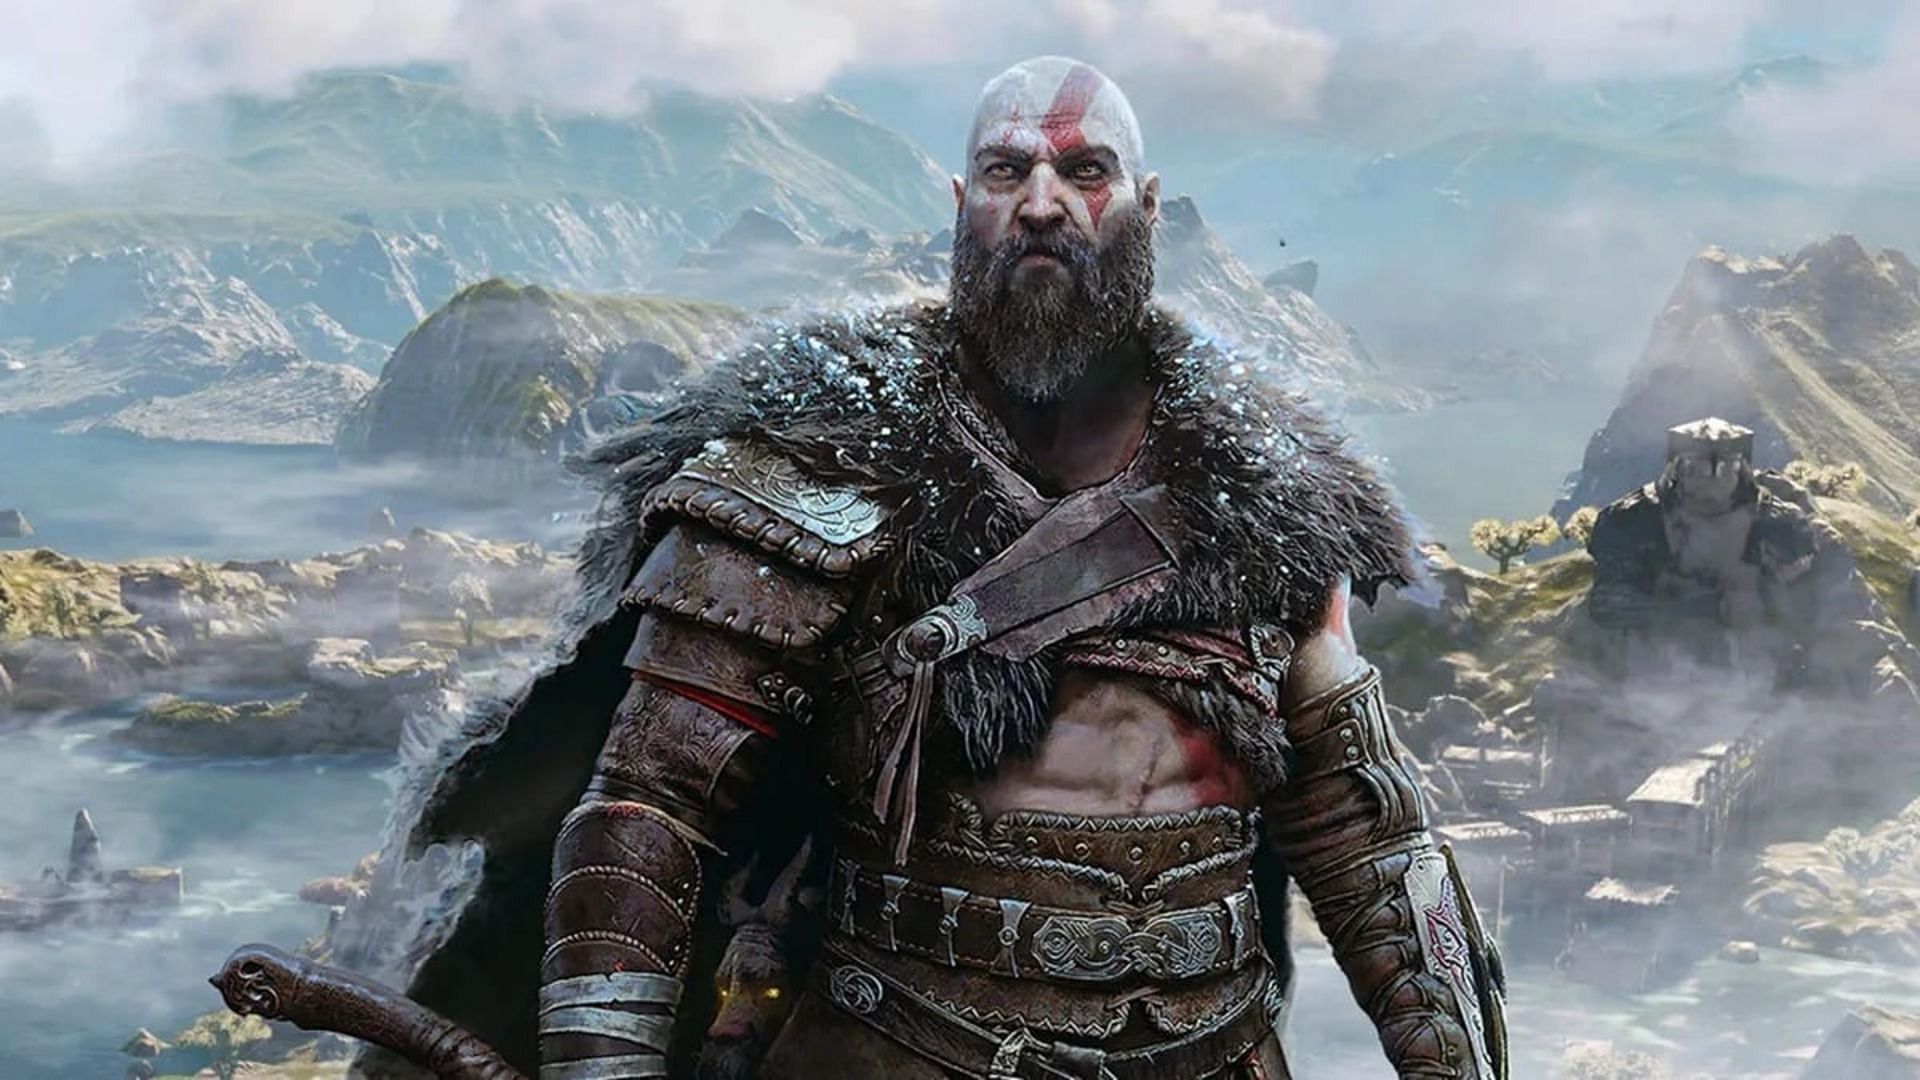 Male video game characters - Kratos (Image via Santa Monica Studios)